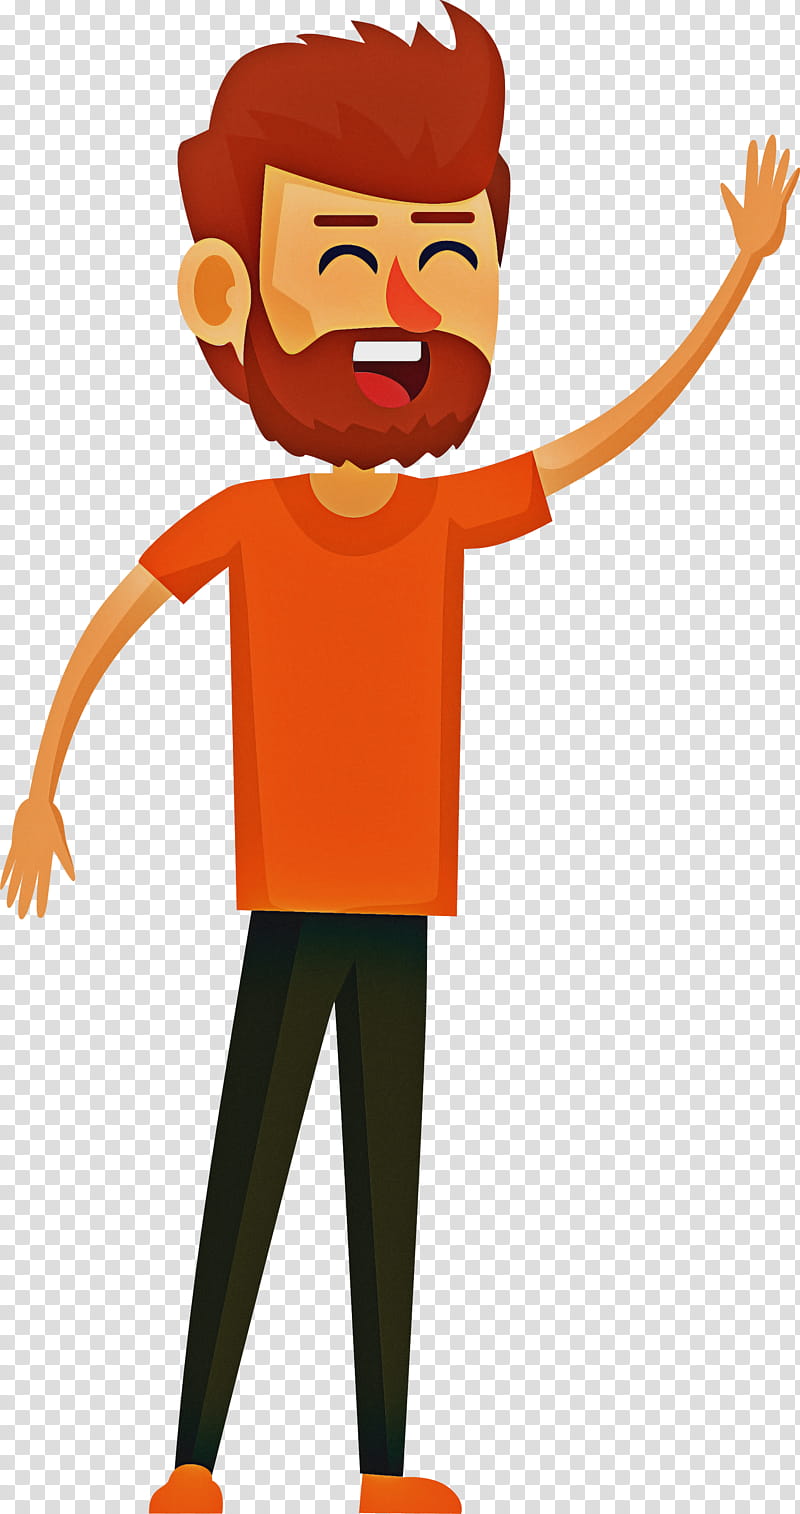 Orange, Mascot, Character, Orange Sa, Friendship, Behavior, Human, Orange Uk transparent background PNG clipart